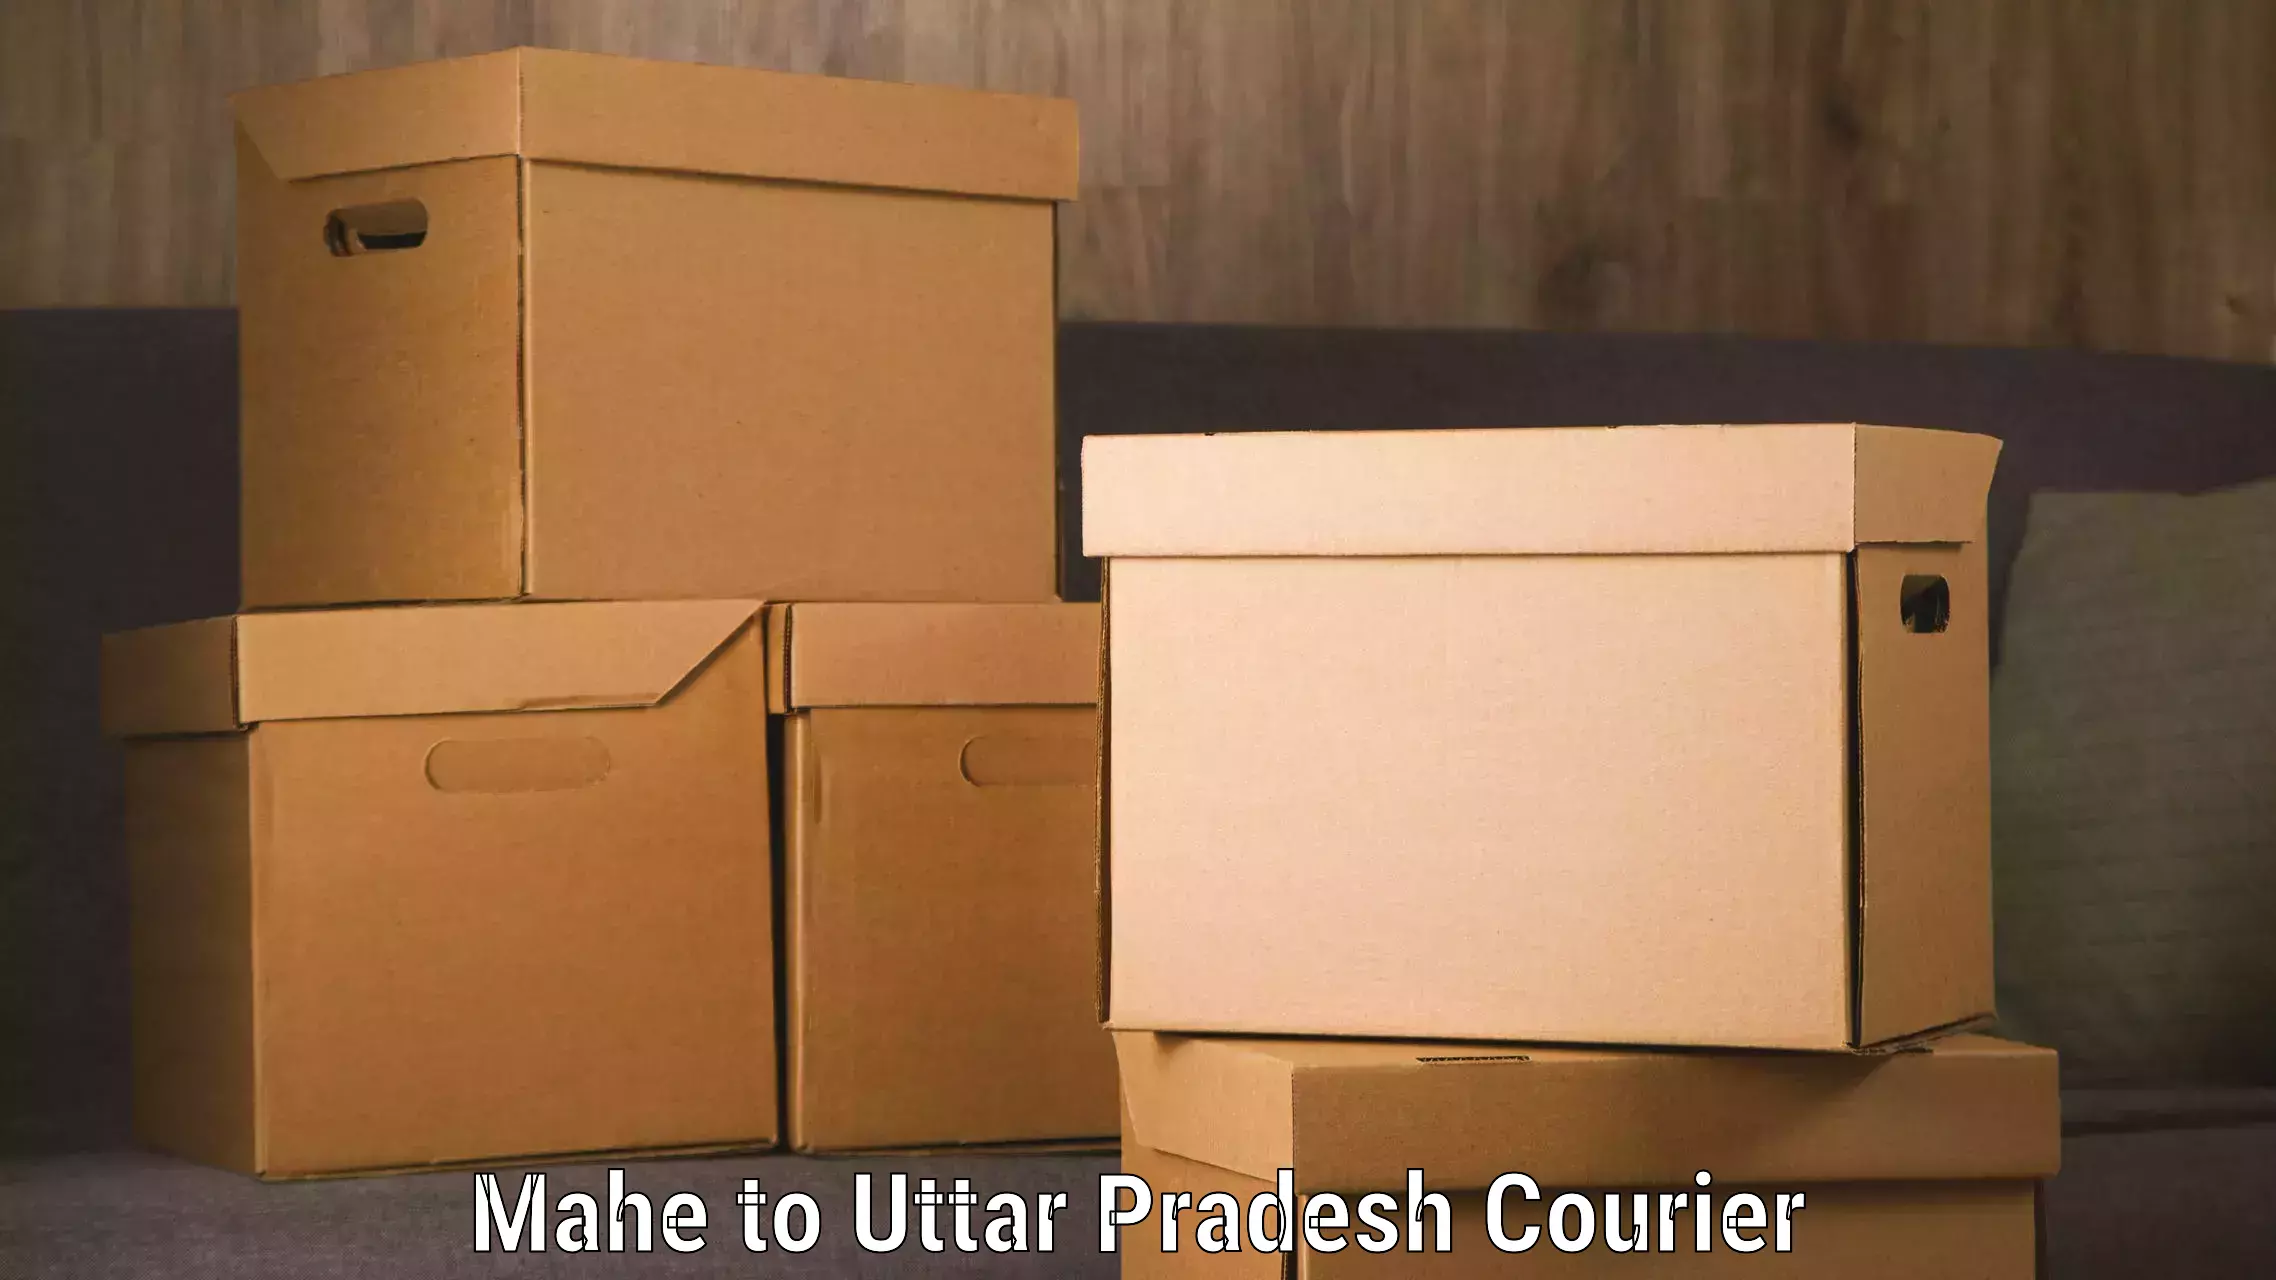 Advanced tracking systems Mahe to Uttar Pradesh